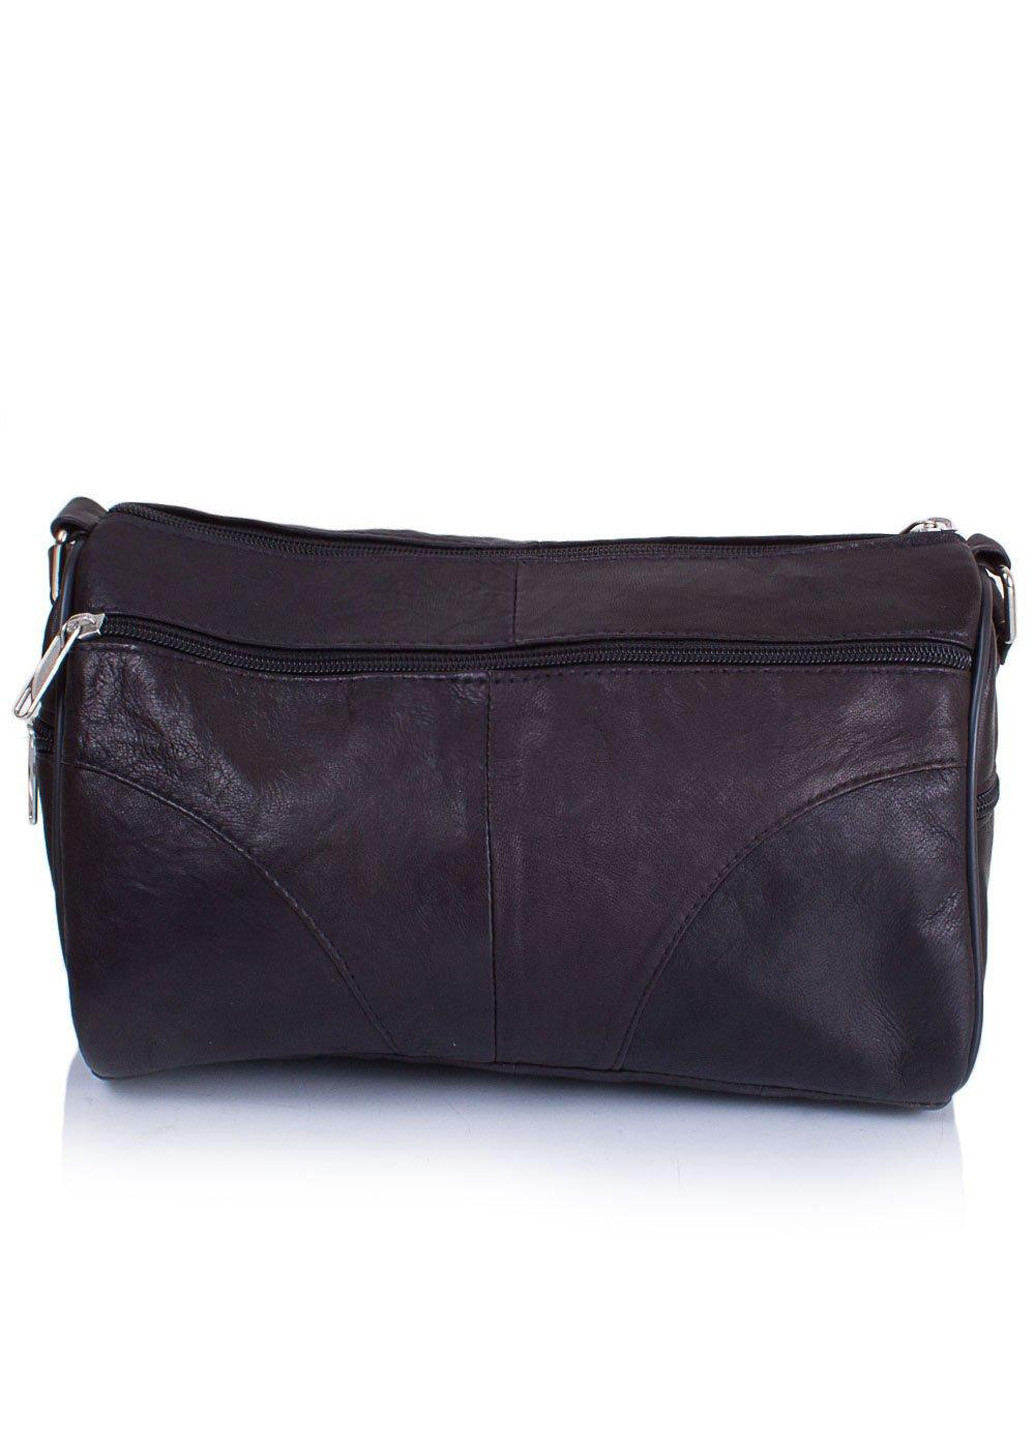 Женская кожаная сумка-багет 25х16х13 см TuNoNa (195546851)